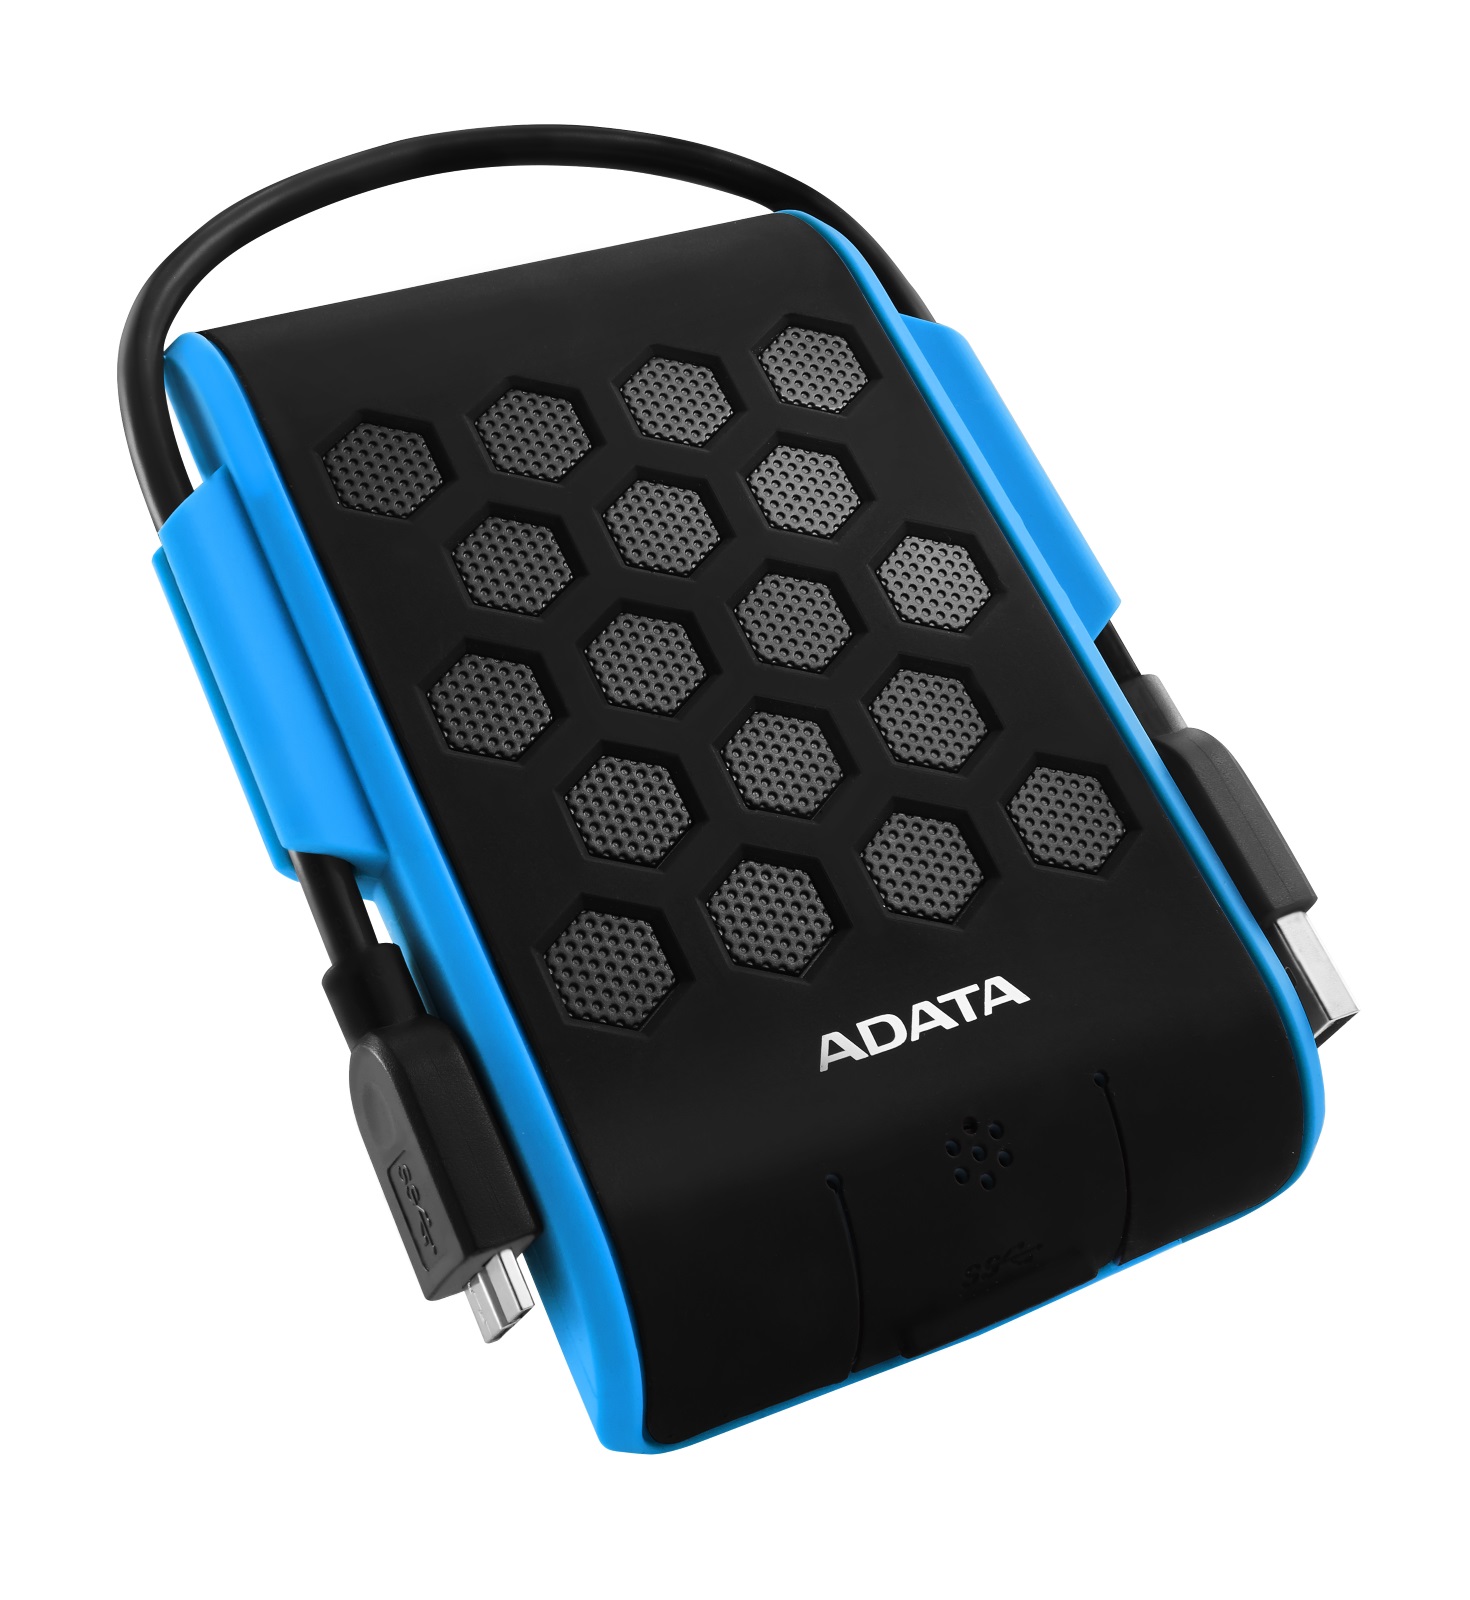 NEW ADATA HD710 Pro Blue External HDD 2TB IP68 Waterproof Shockproof Hard Drive 